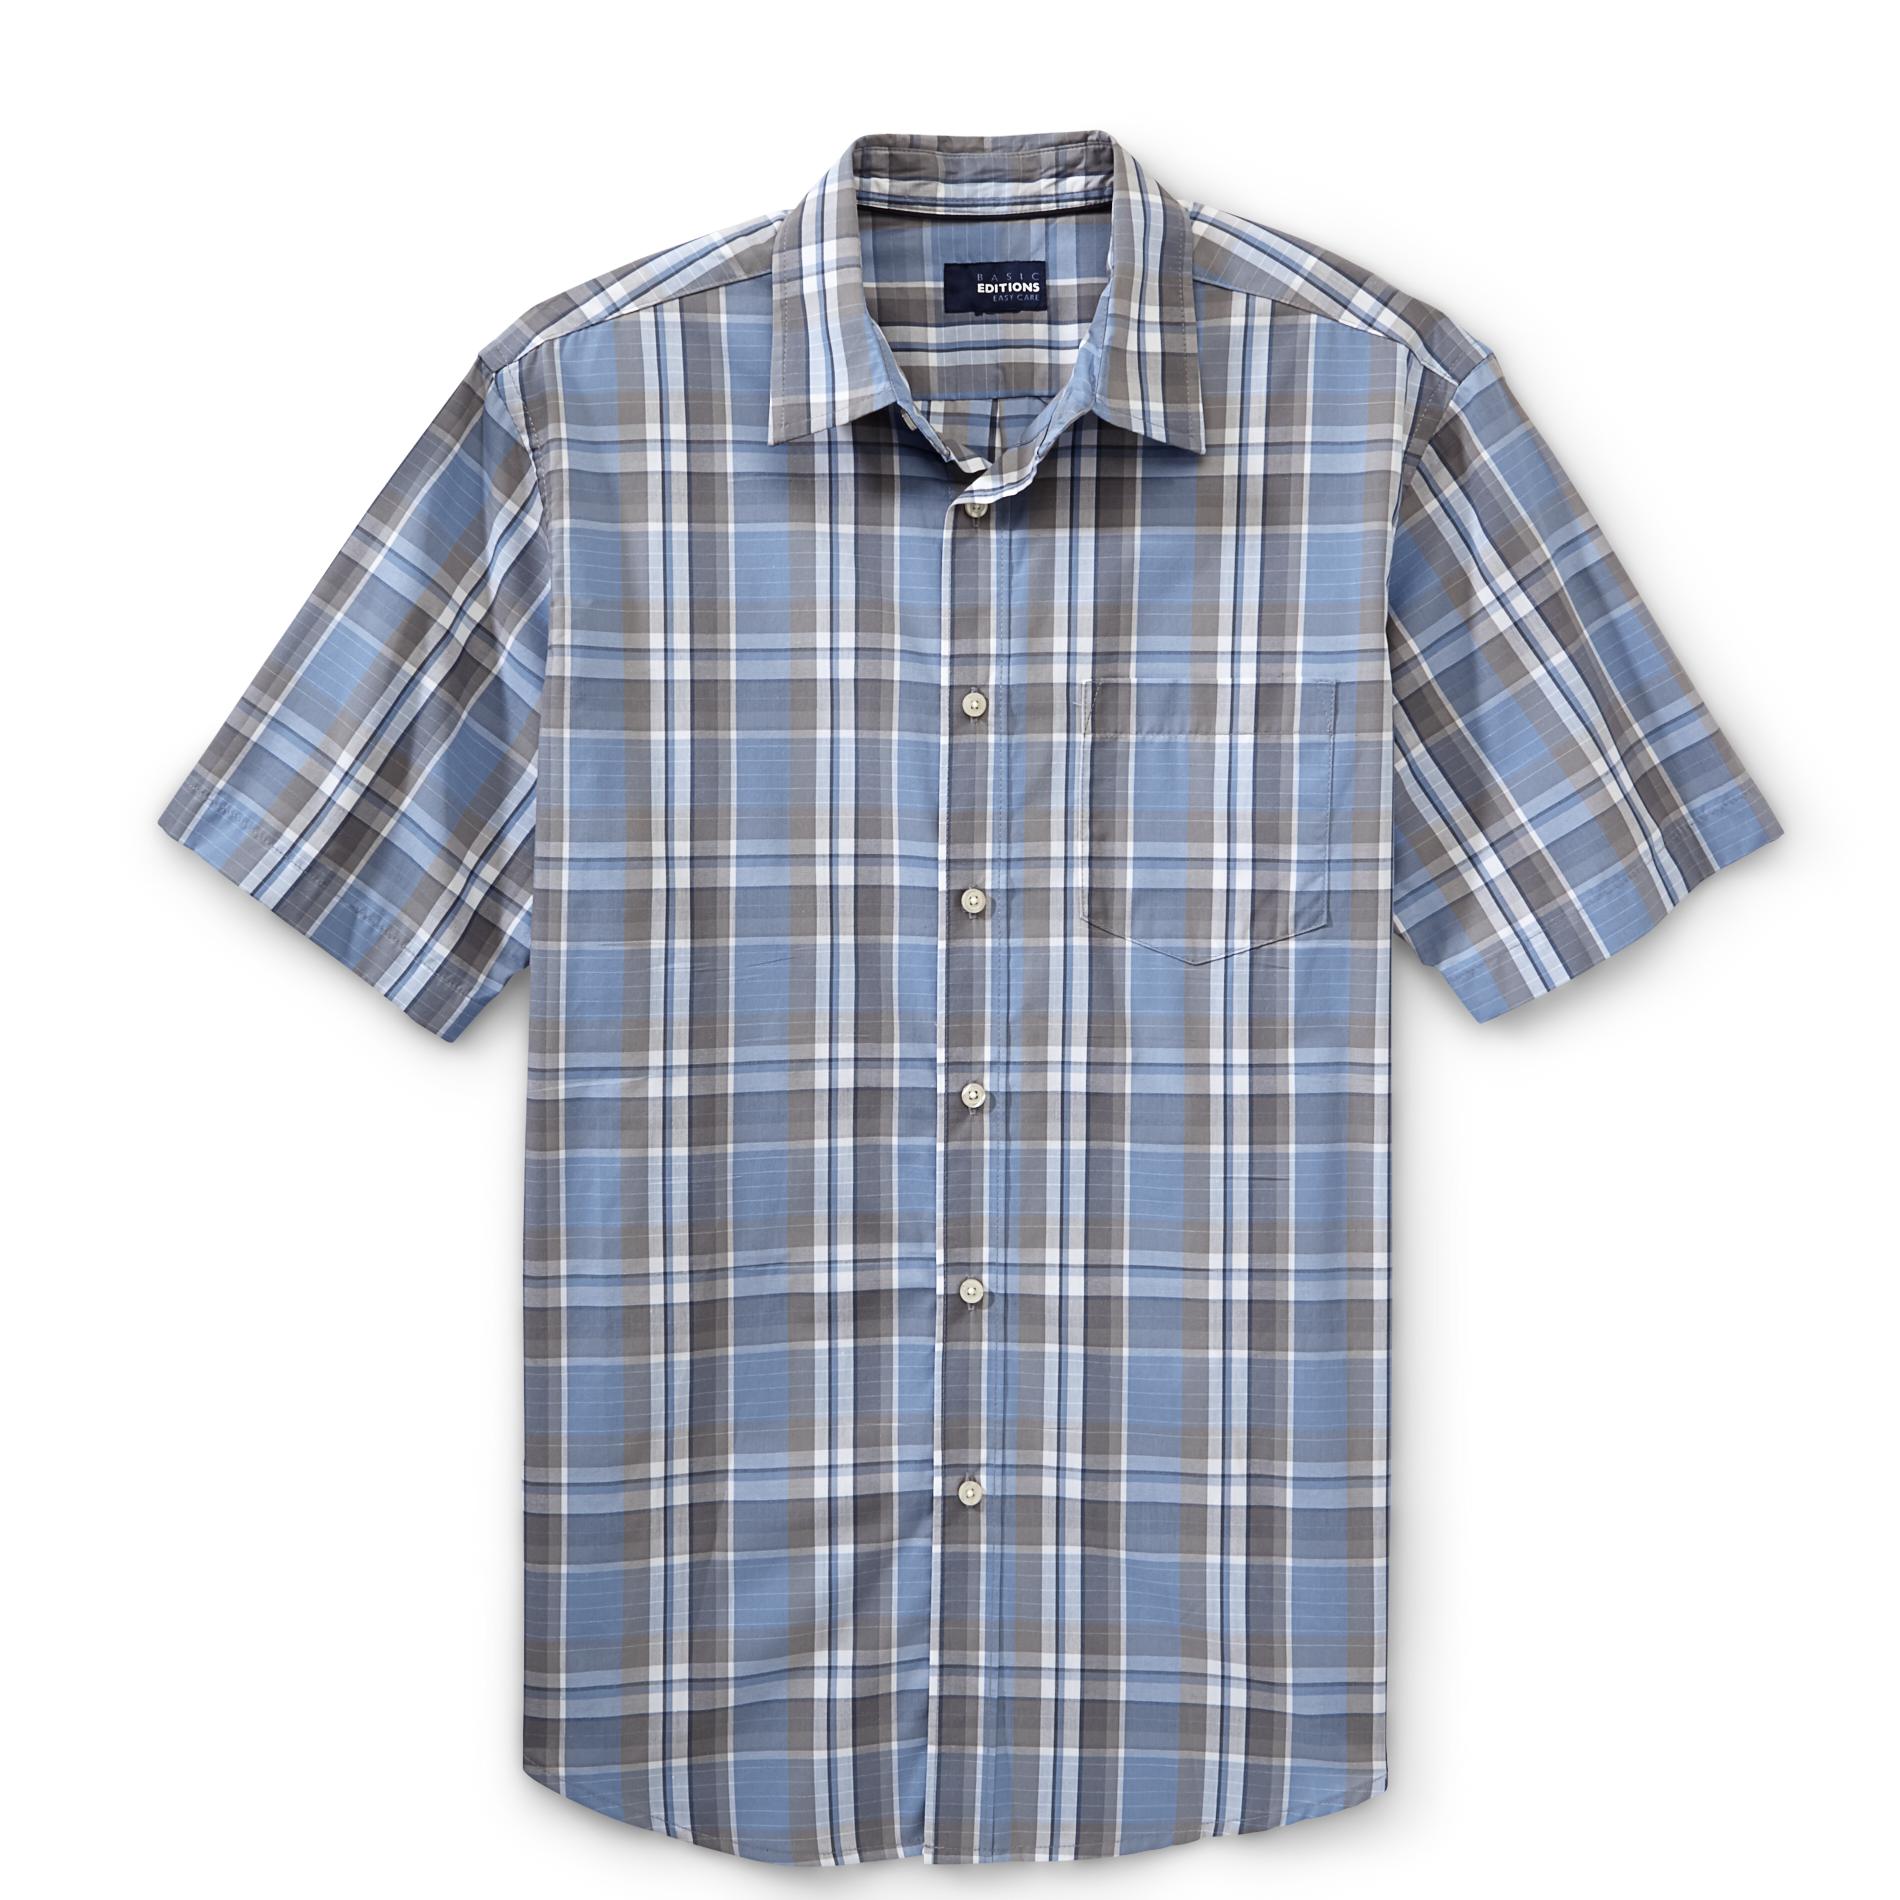 Basic Editions Men's Big & Tall Easy-Care Short-Sleeve Shirt - Plaid